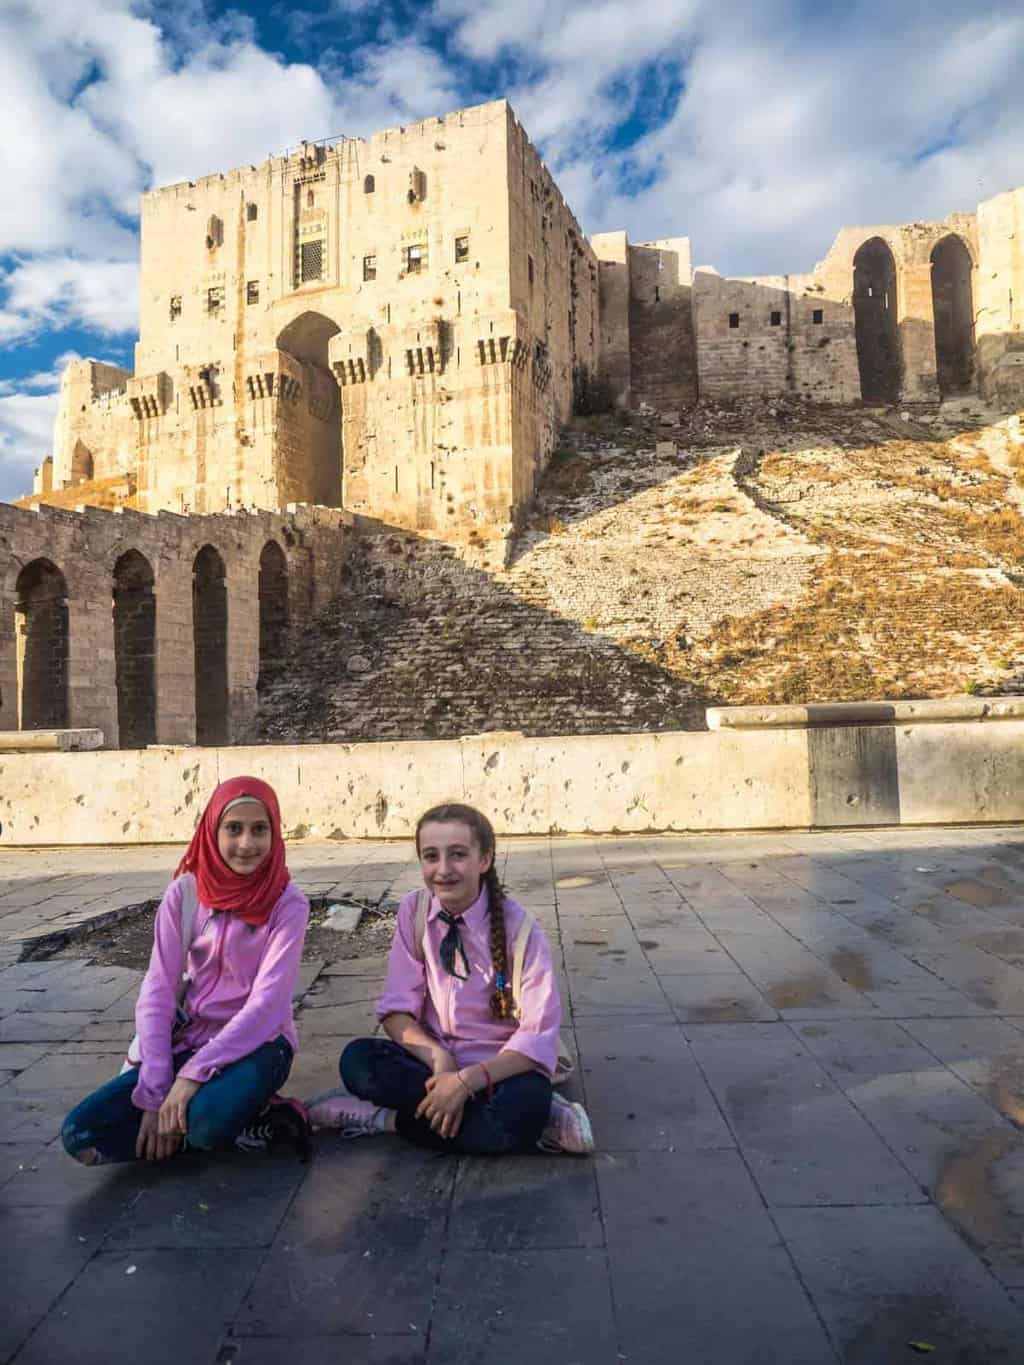 Aleppo citadel in 2017 young school kids